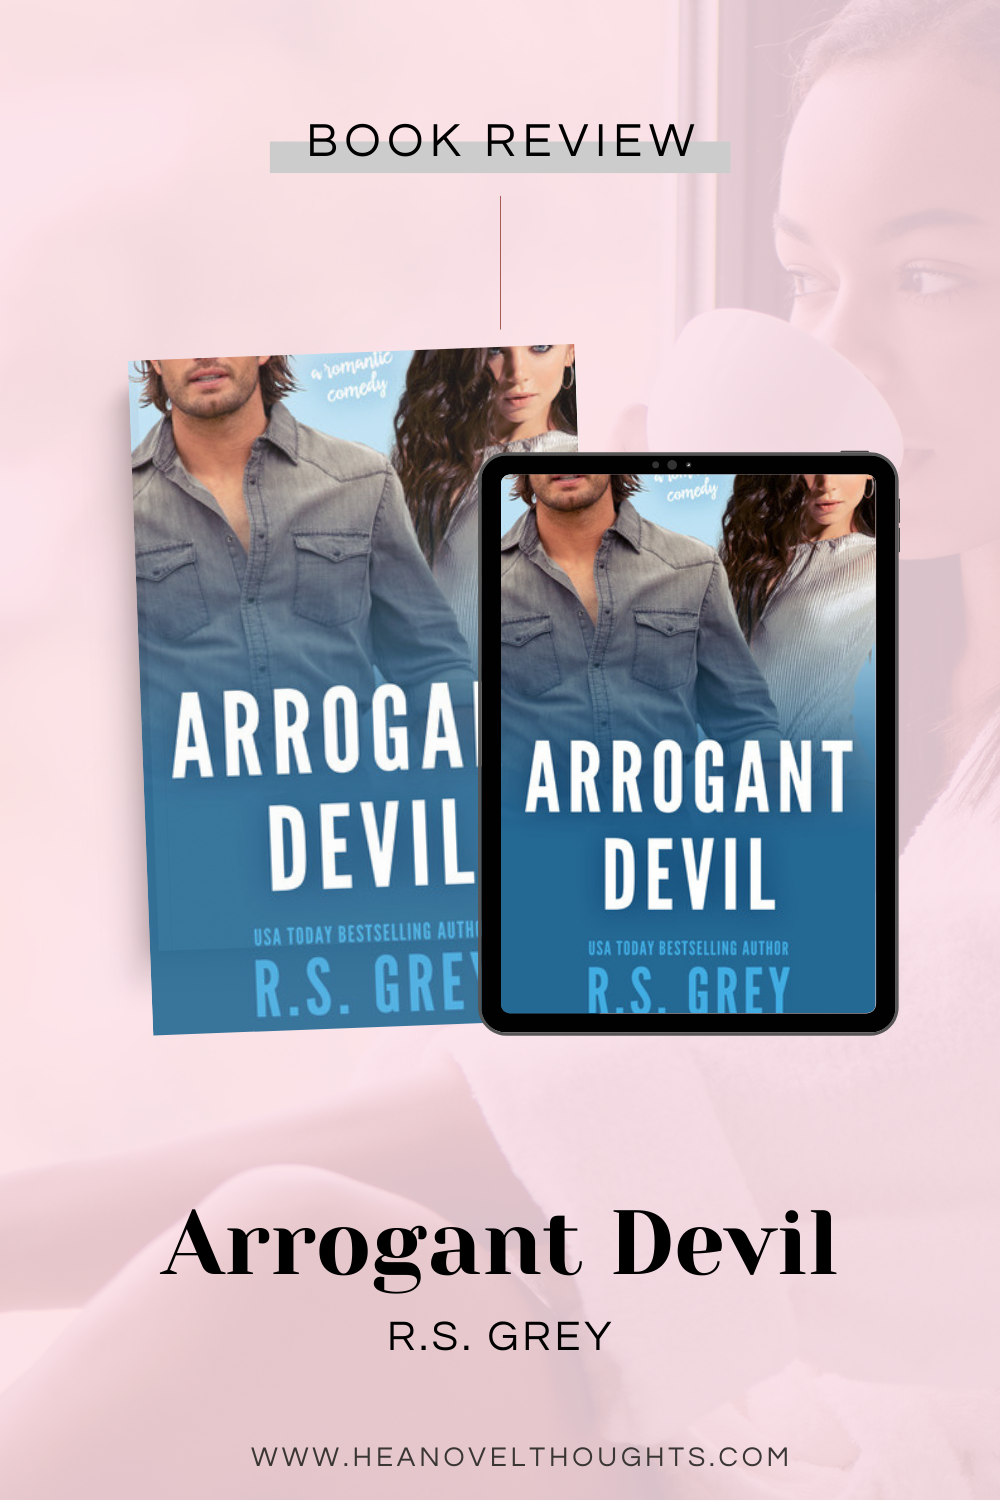 Arrogant Devil by R.S. Grey